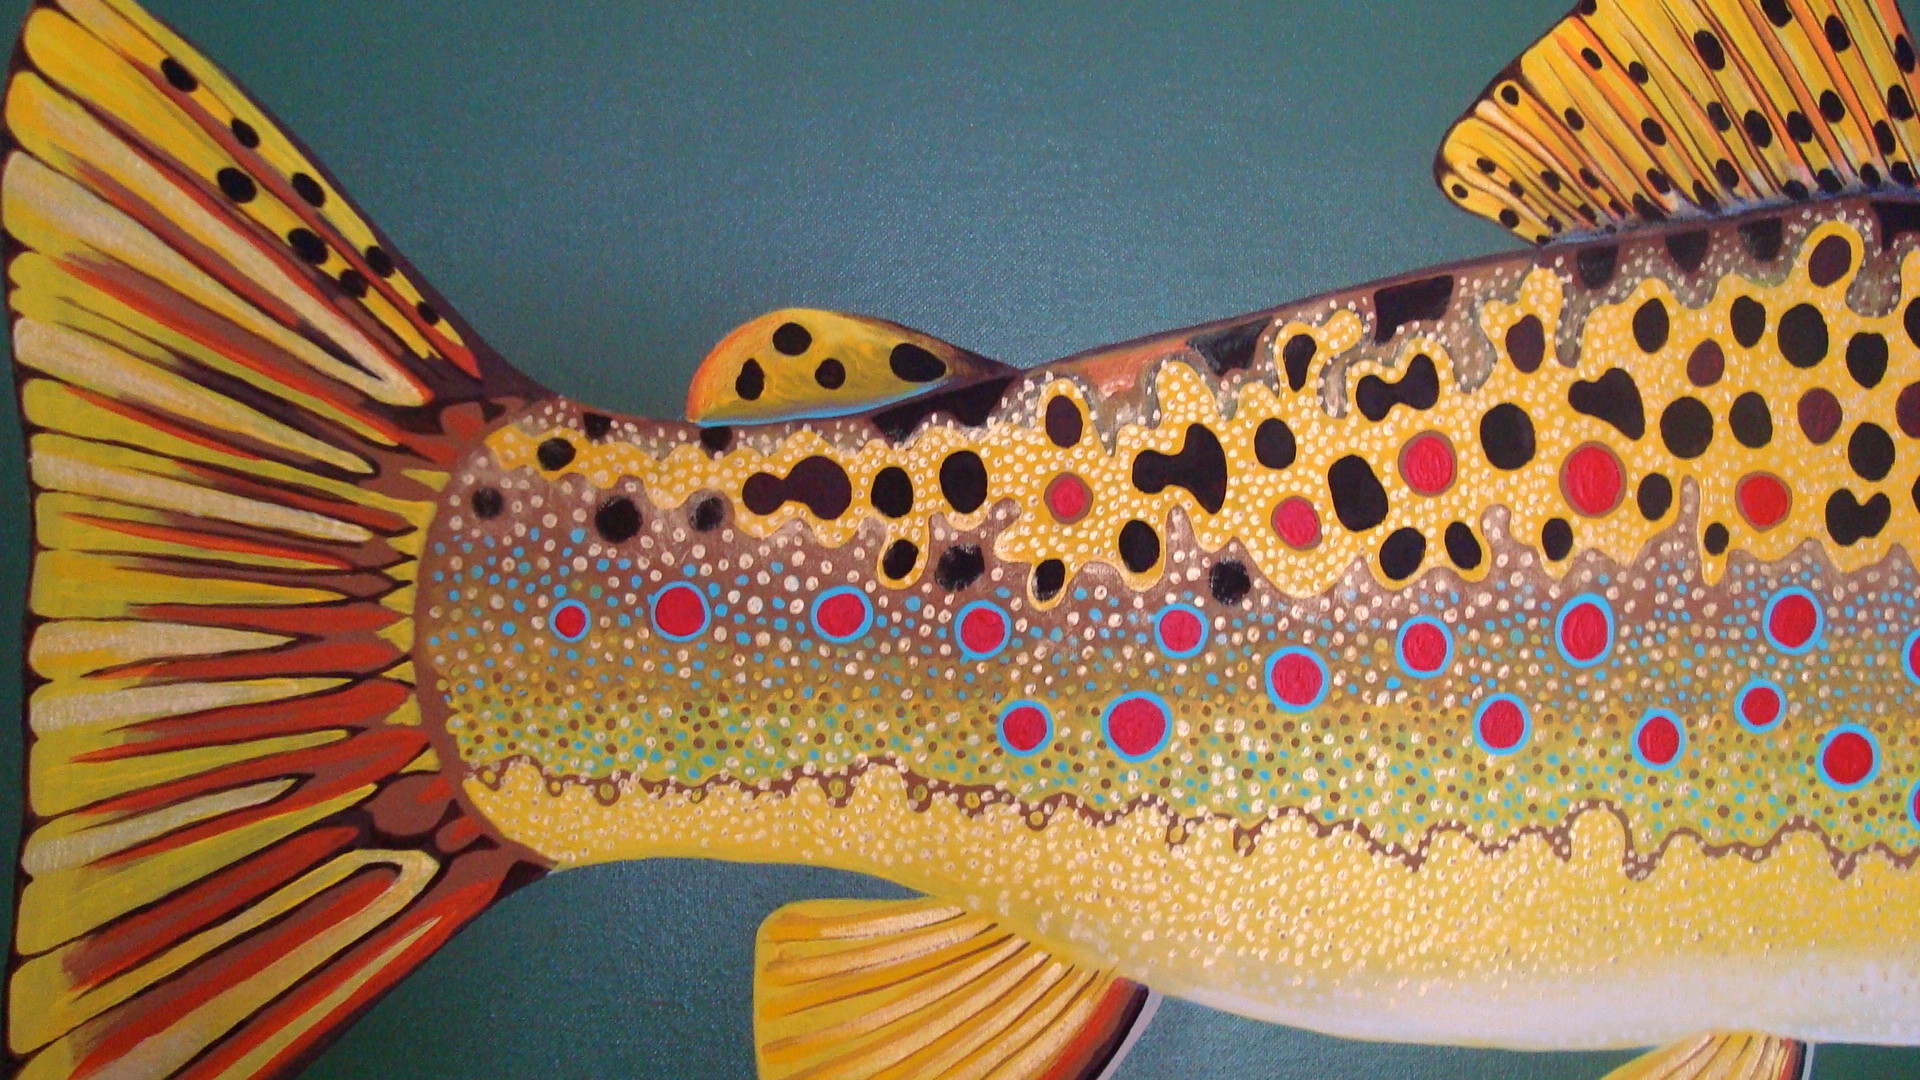 1920x1080 Rainbow Trout Art Wallpaper Provo brown trout 48 x24 